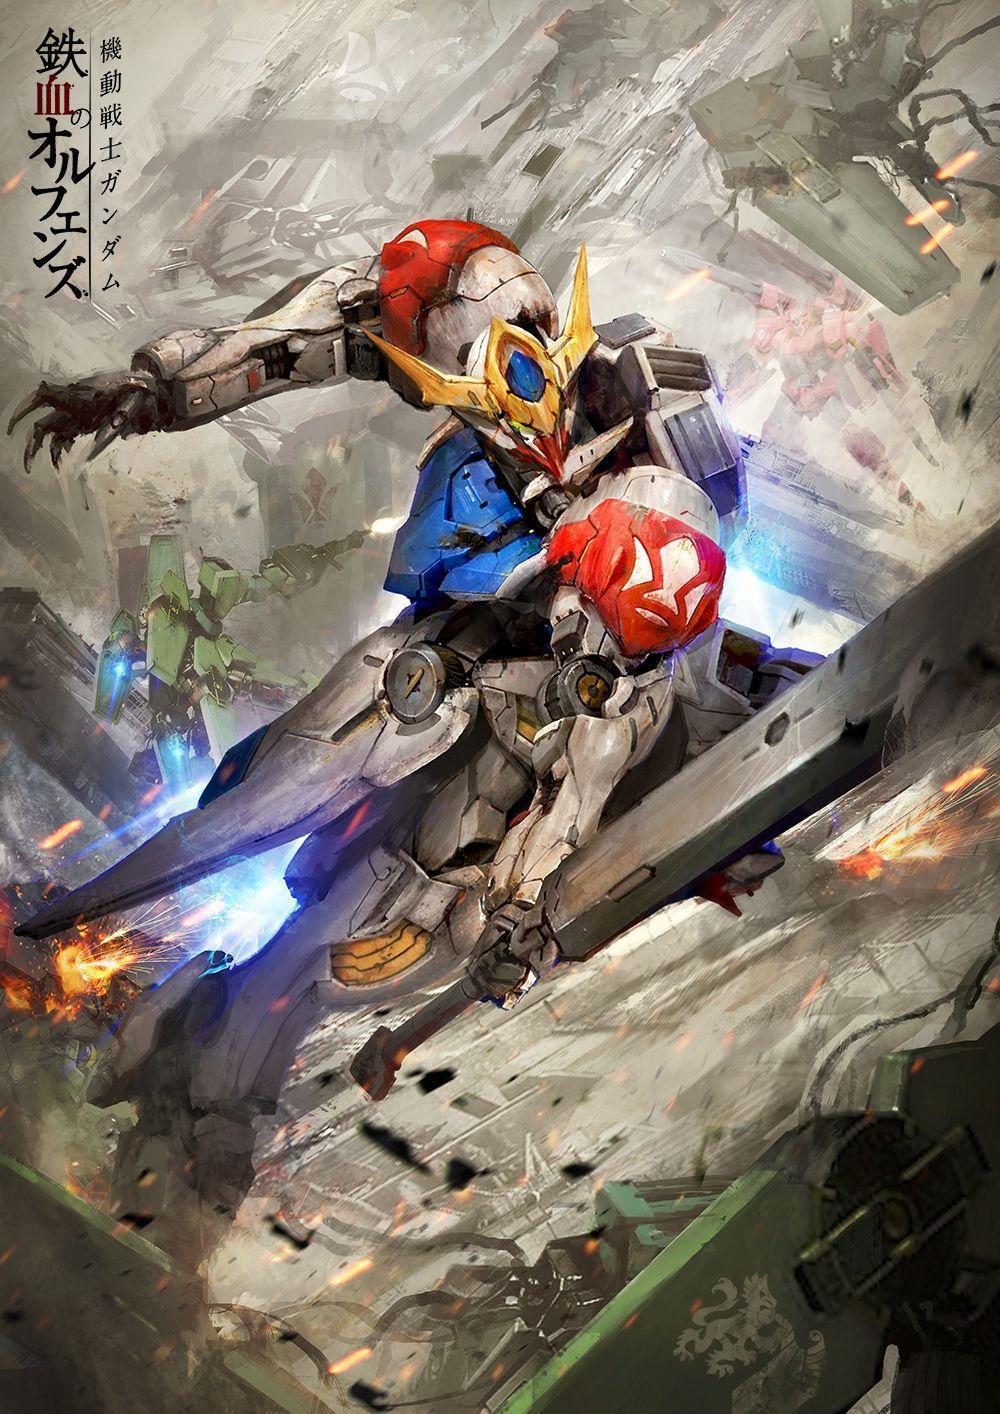 Fanart: Awesome Gundam Wallpaper